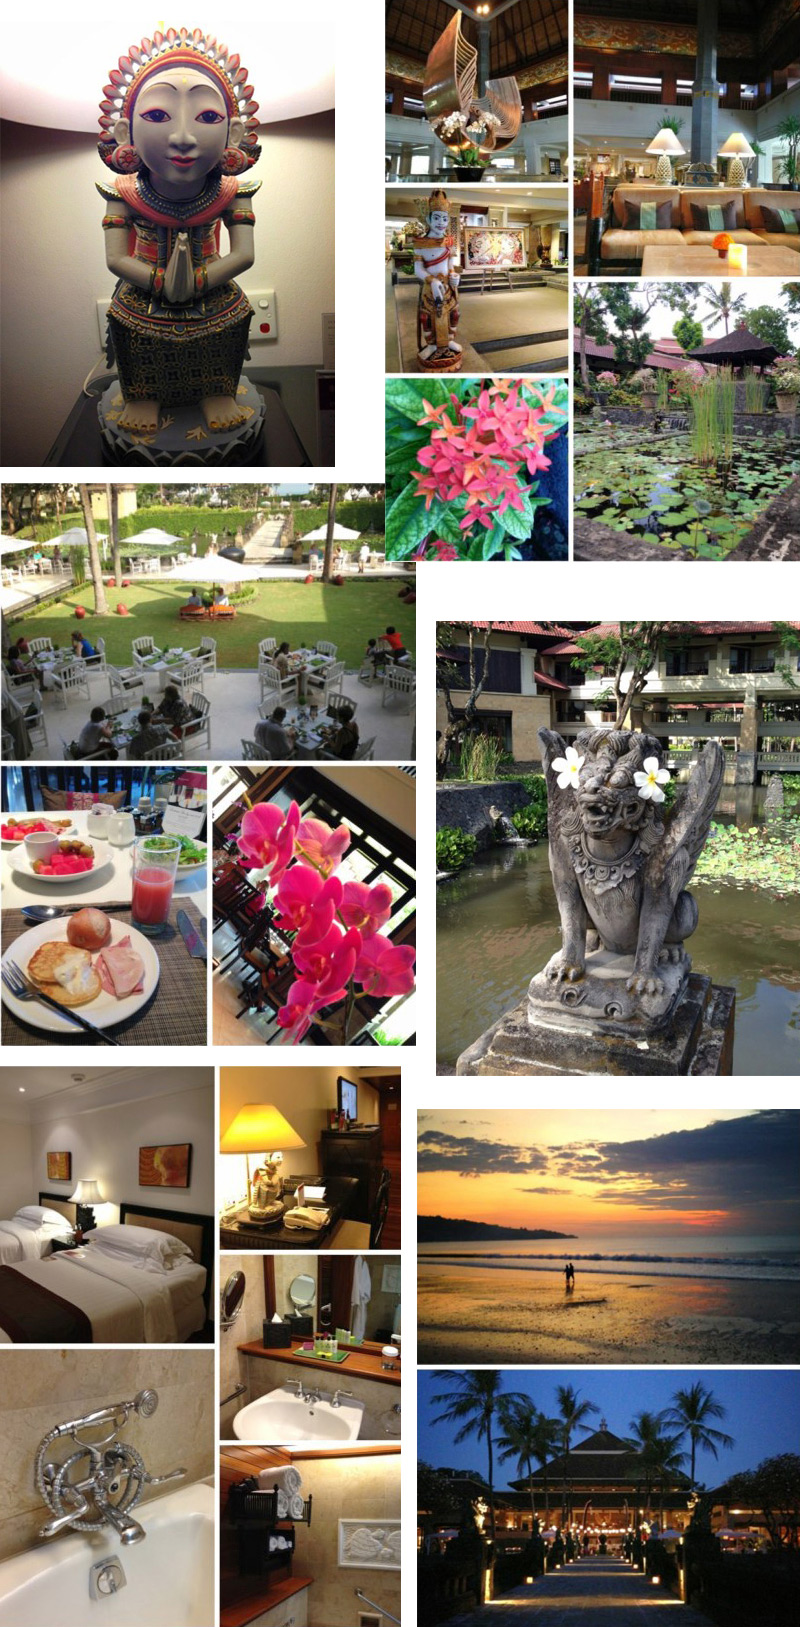 Holiday in Bali★バリ島度假★2013.4.30〜5.6_f0199618_1322784.jpg